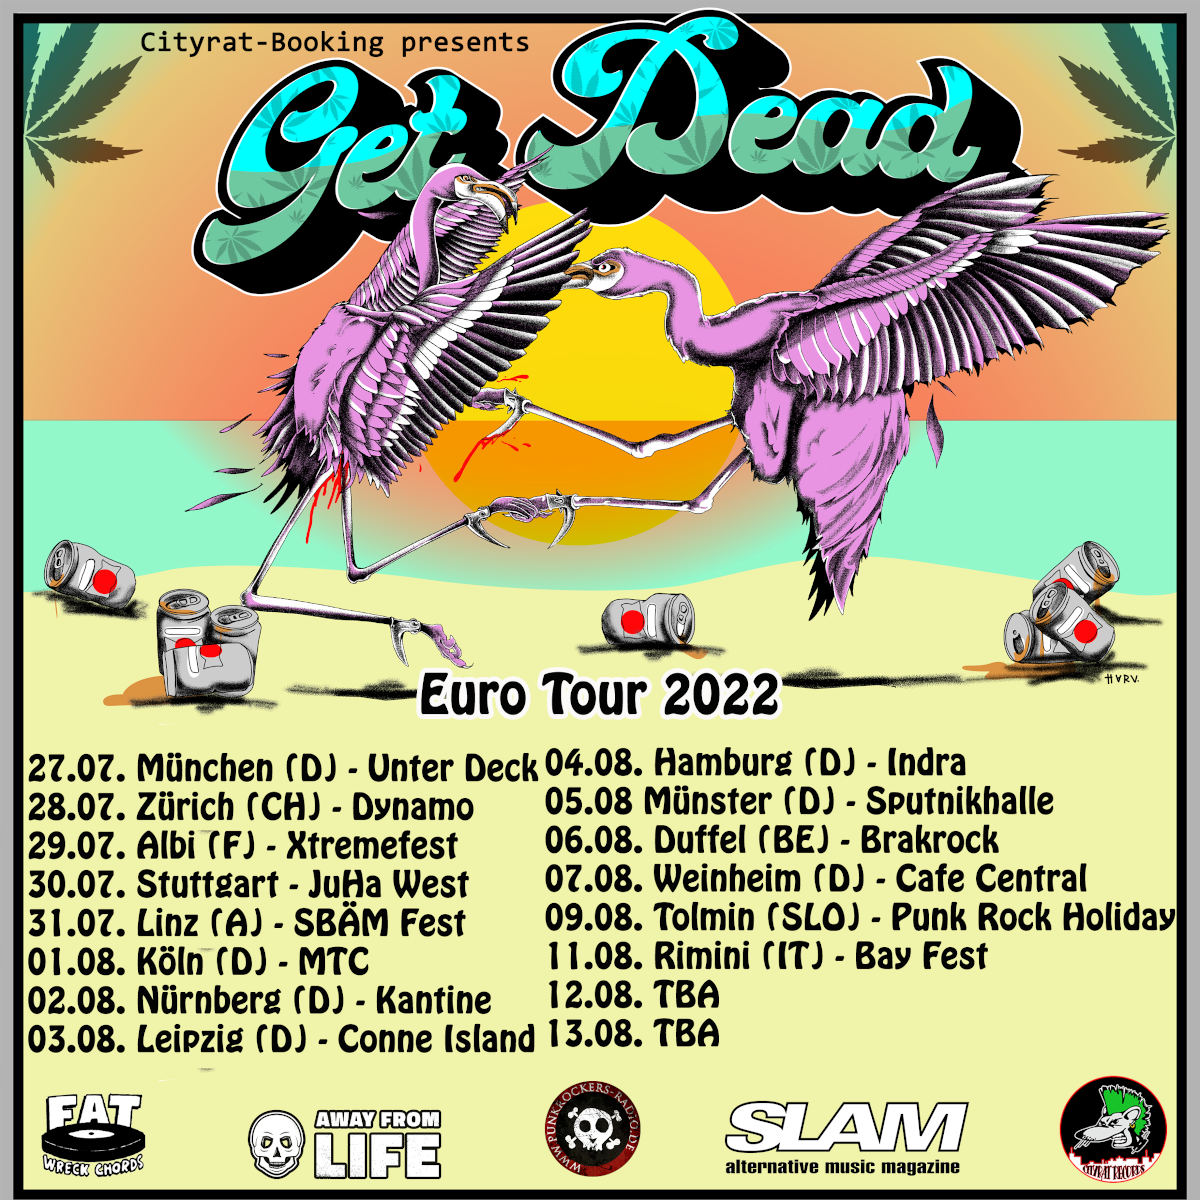 Get Dead - Europa-Tour 2022